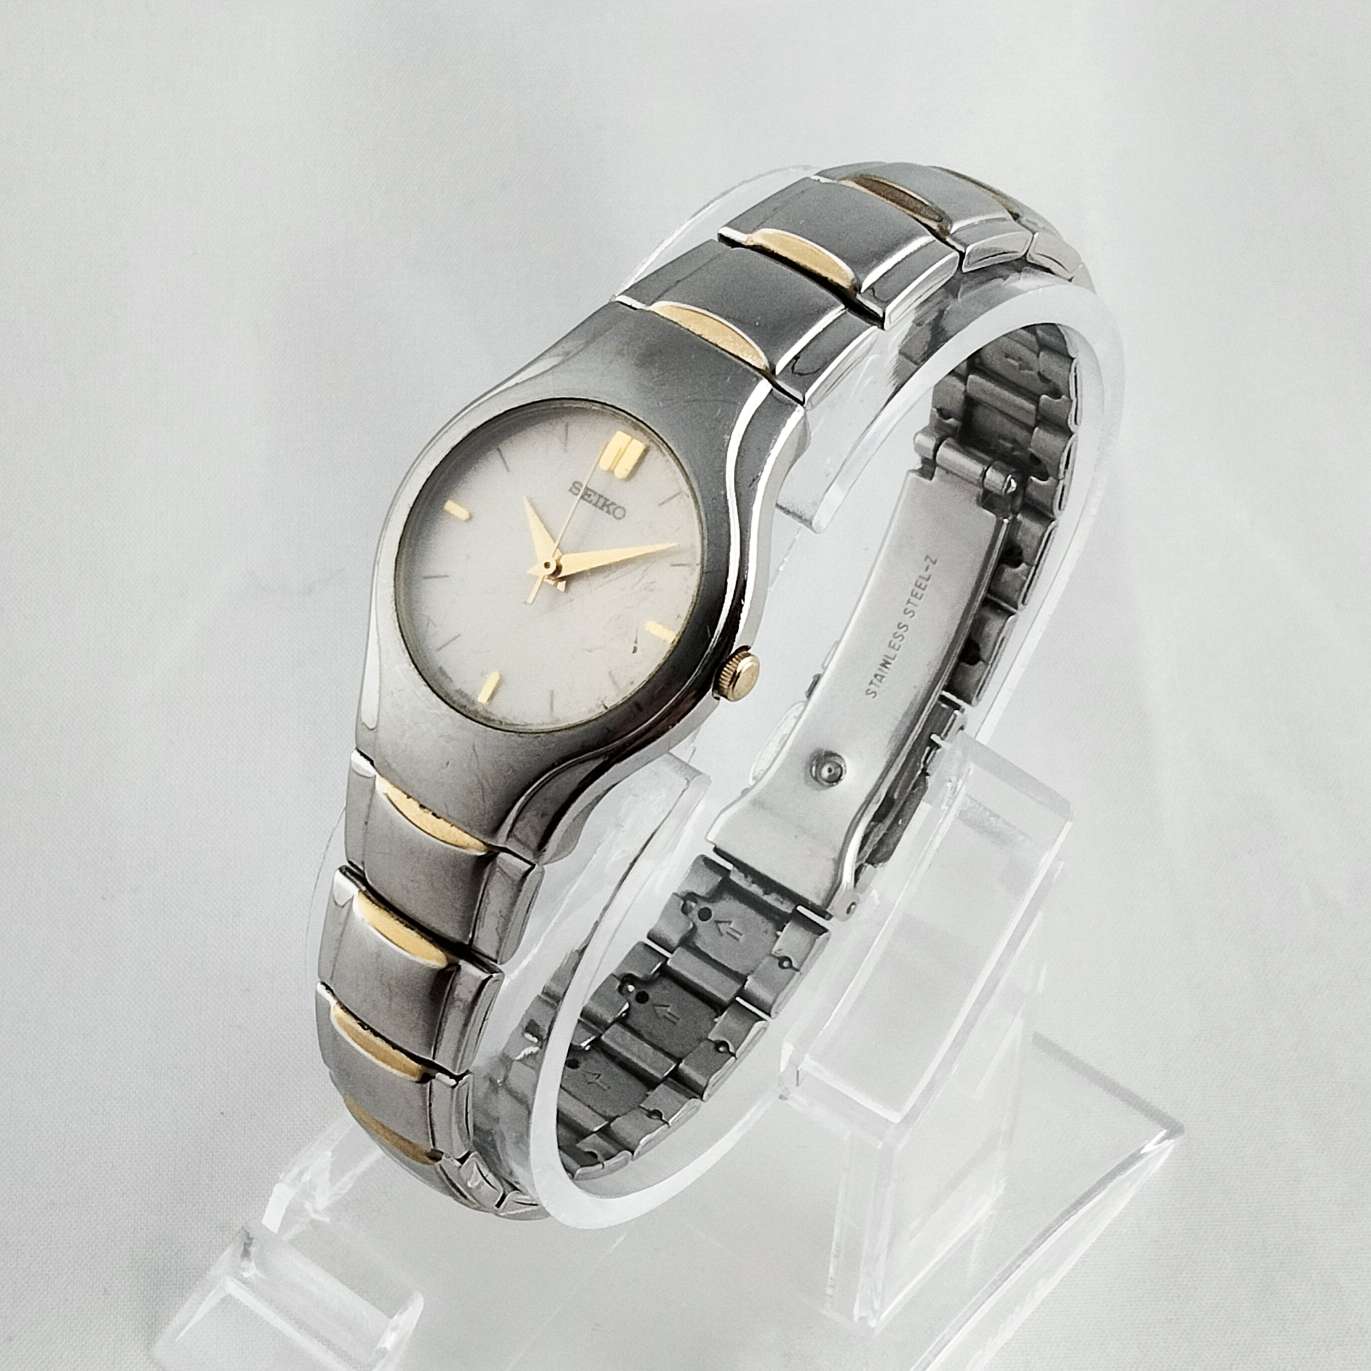 Seiko Unisex Watch, Gold Tone Details, Bracelet Strap